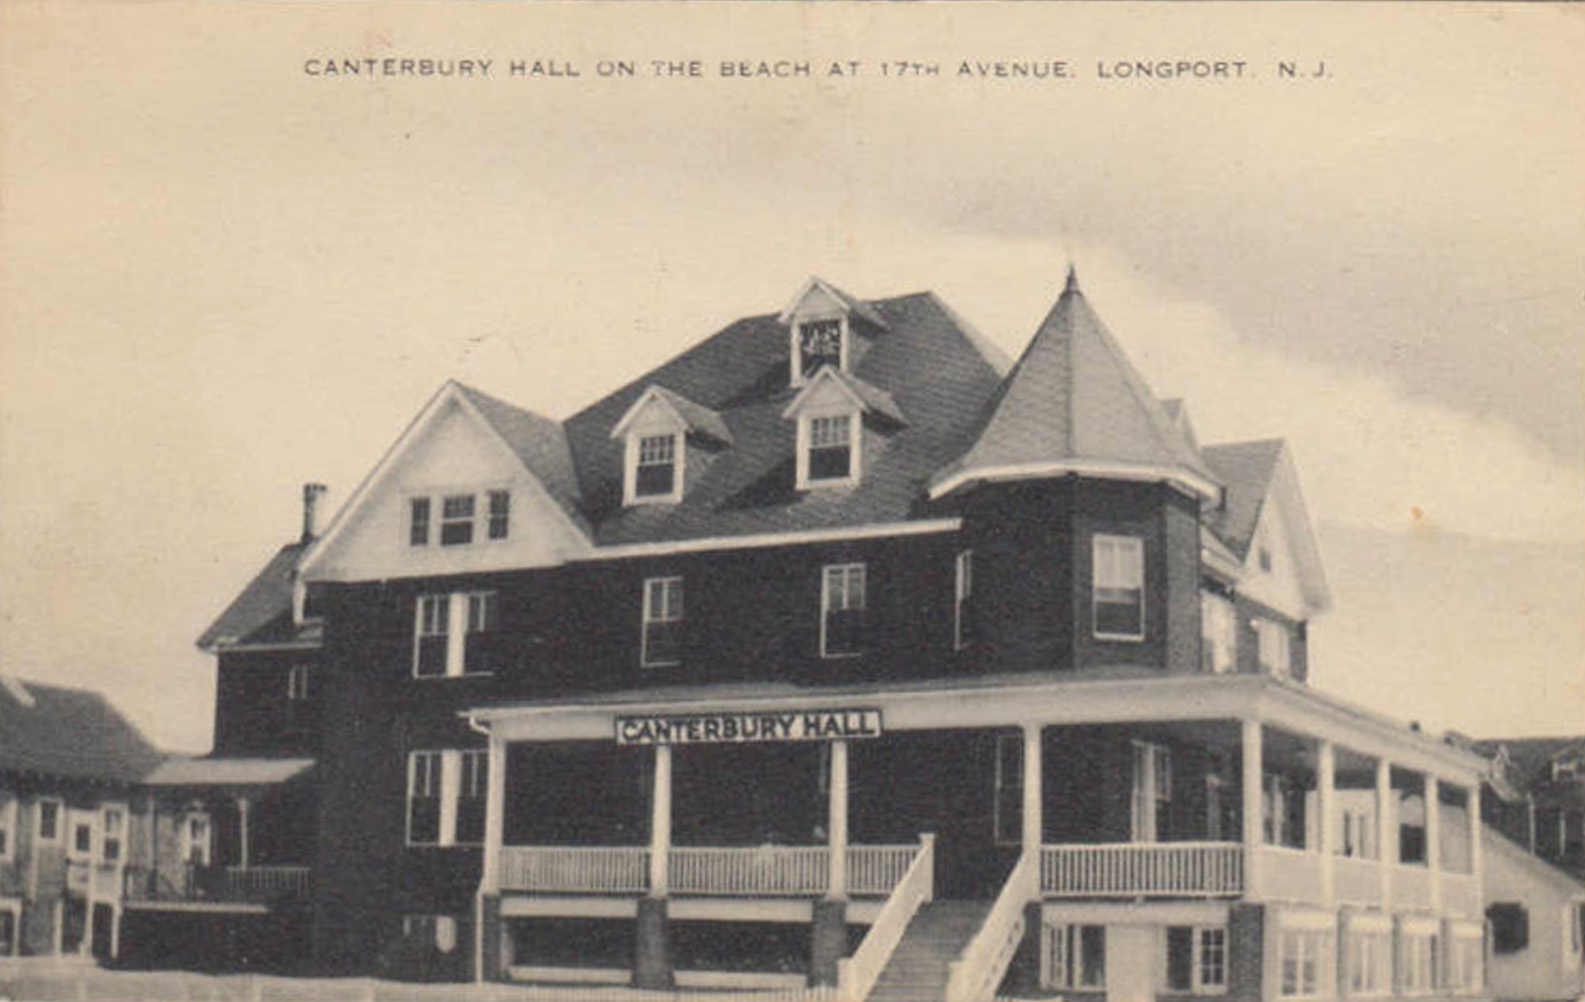 Longport - The Canterbury Inn